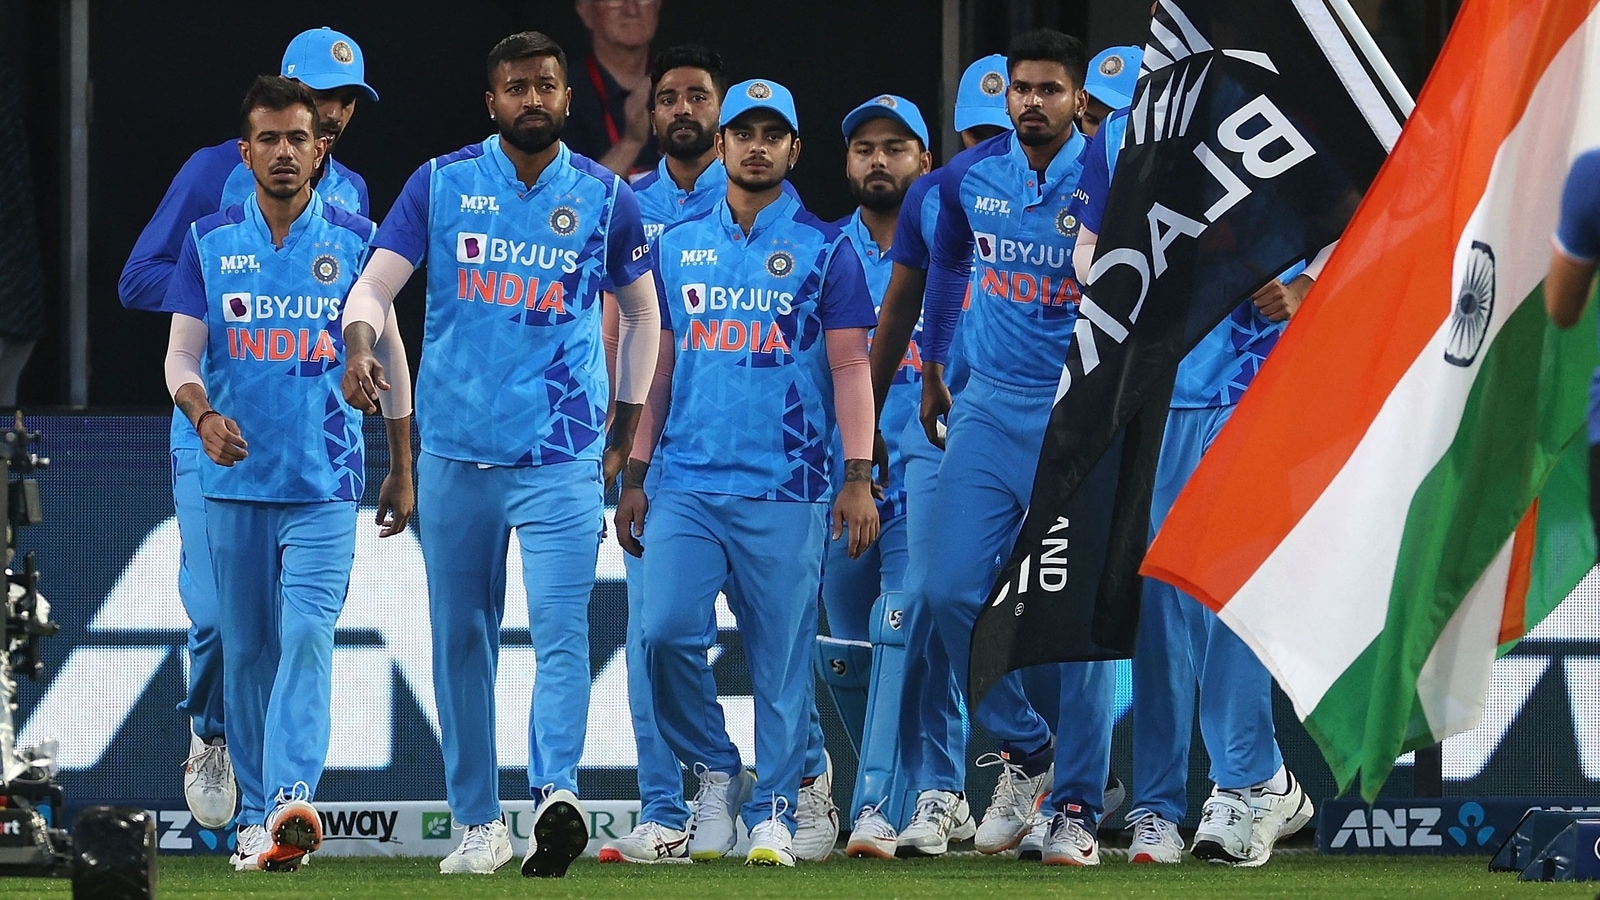 Mission T20 revamp for India under Hardik Pandya vs Sri Lanka Top